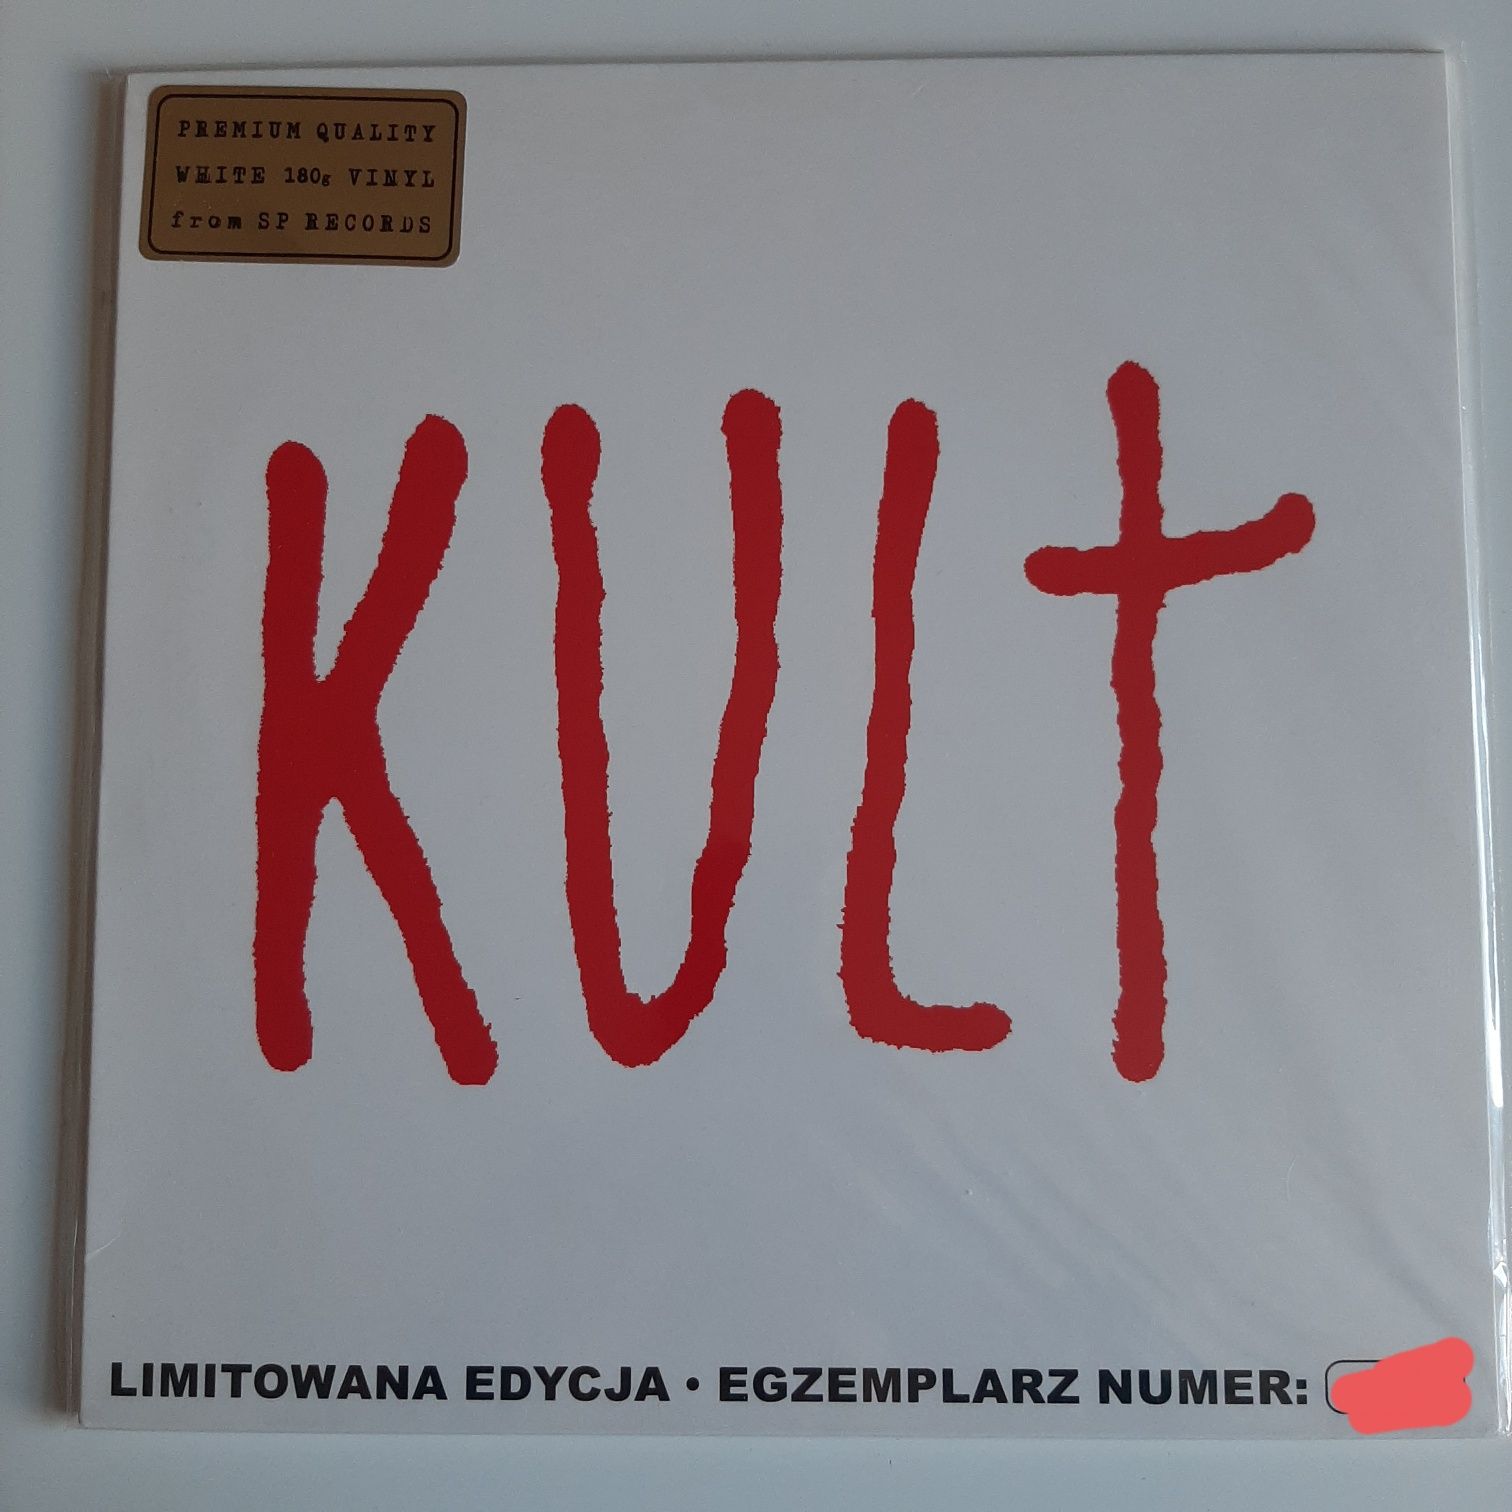 KULT - Kult LP winyl nowa limitowana